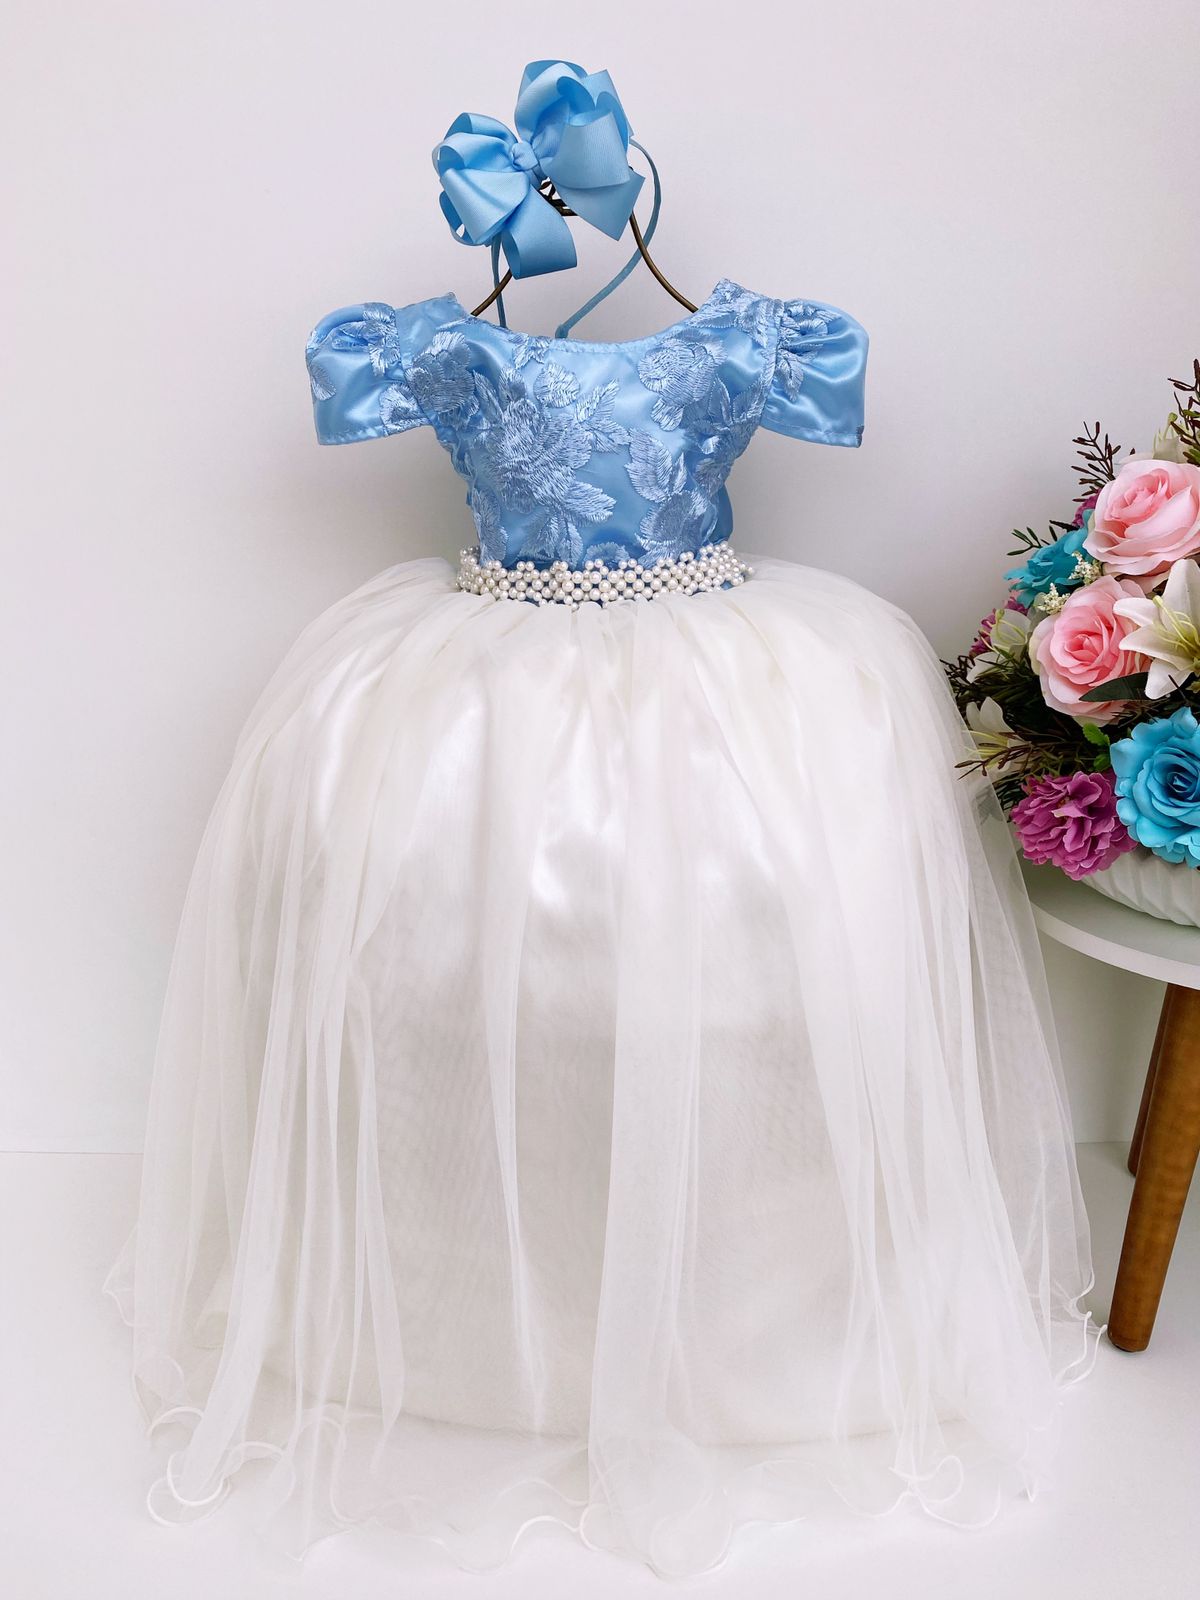 Vestido Infantil Azul Claro e Saia OFF Damas Casamento